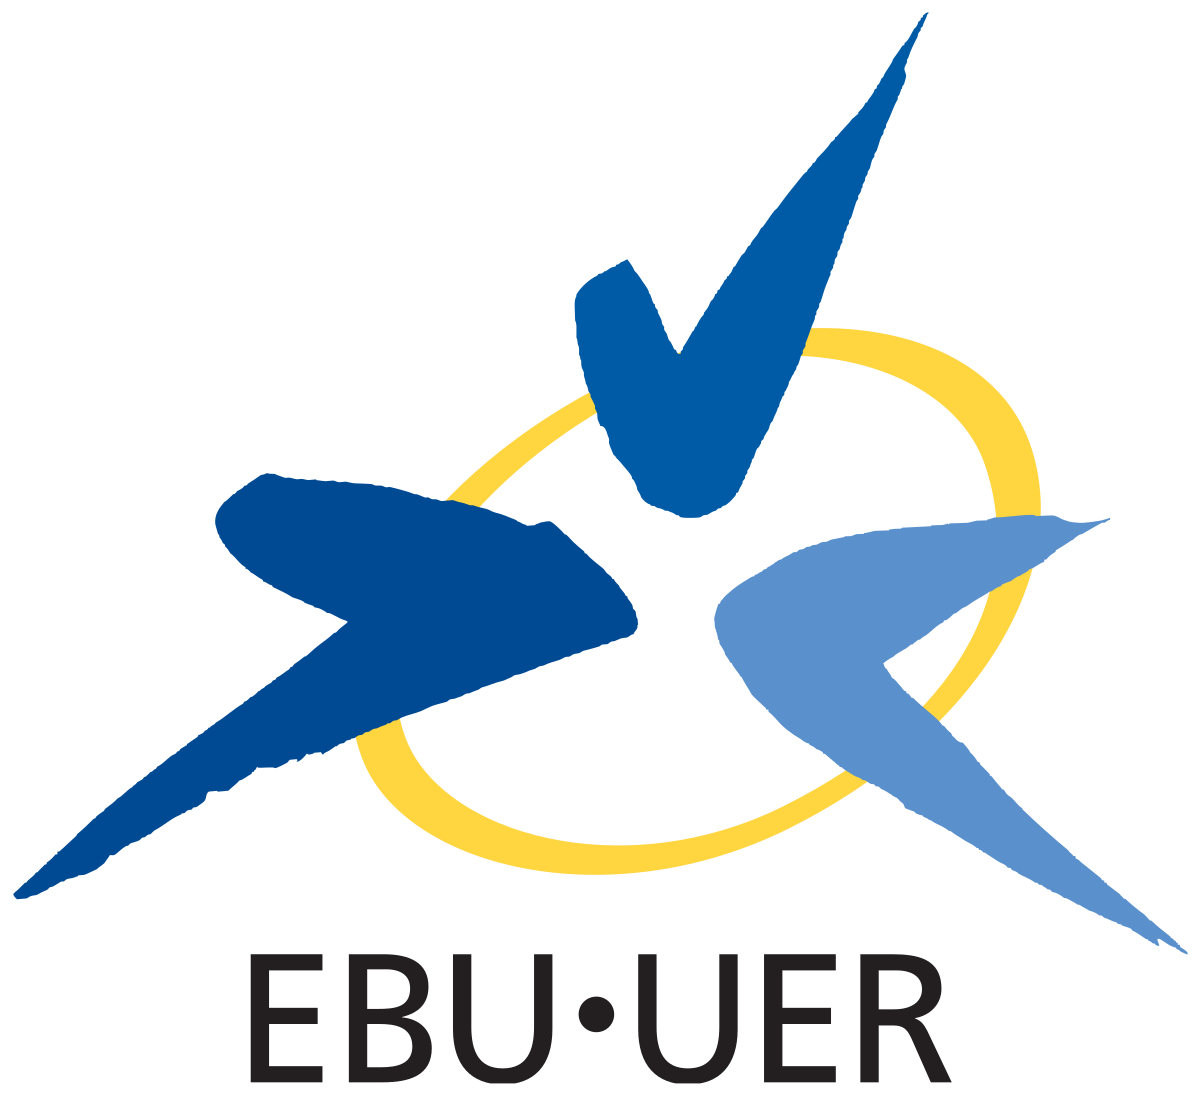 logo EBU